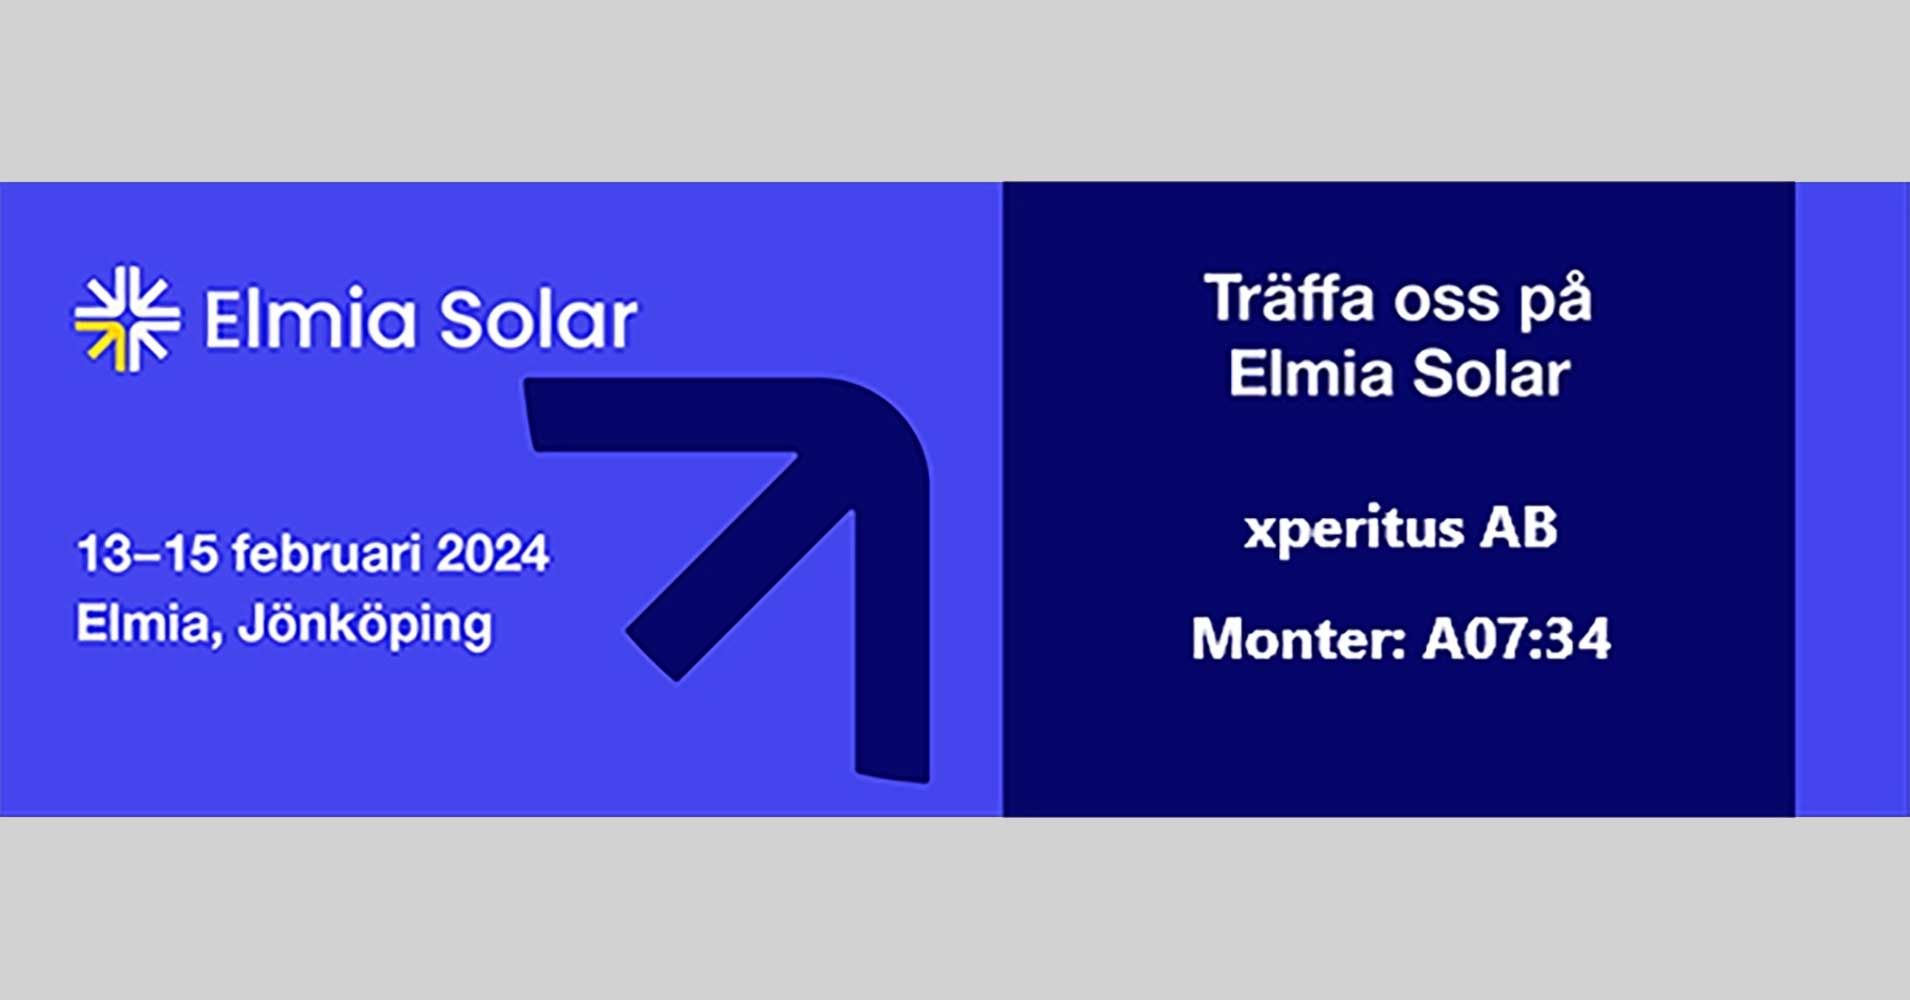 Meet xperitus at Elmia Solar on February 13-15, 2024